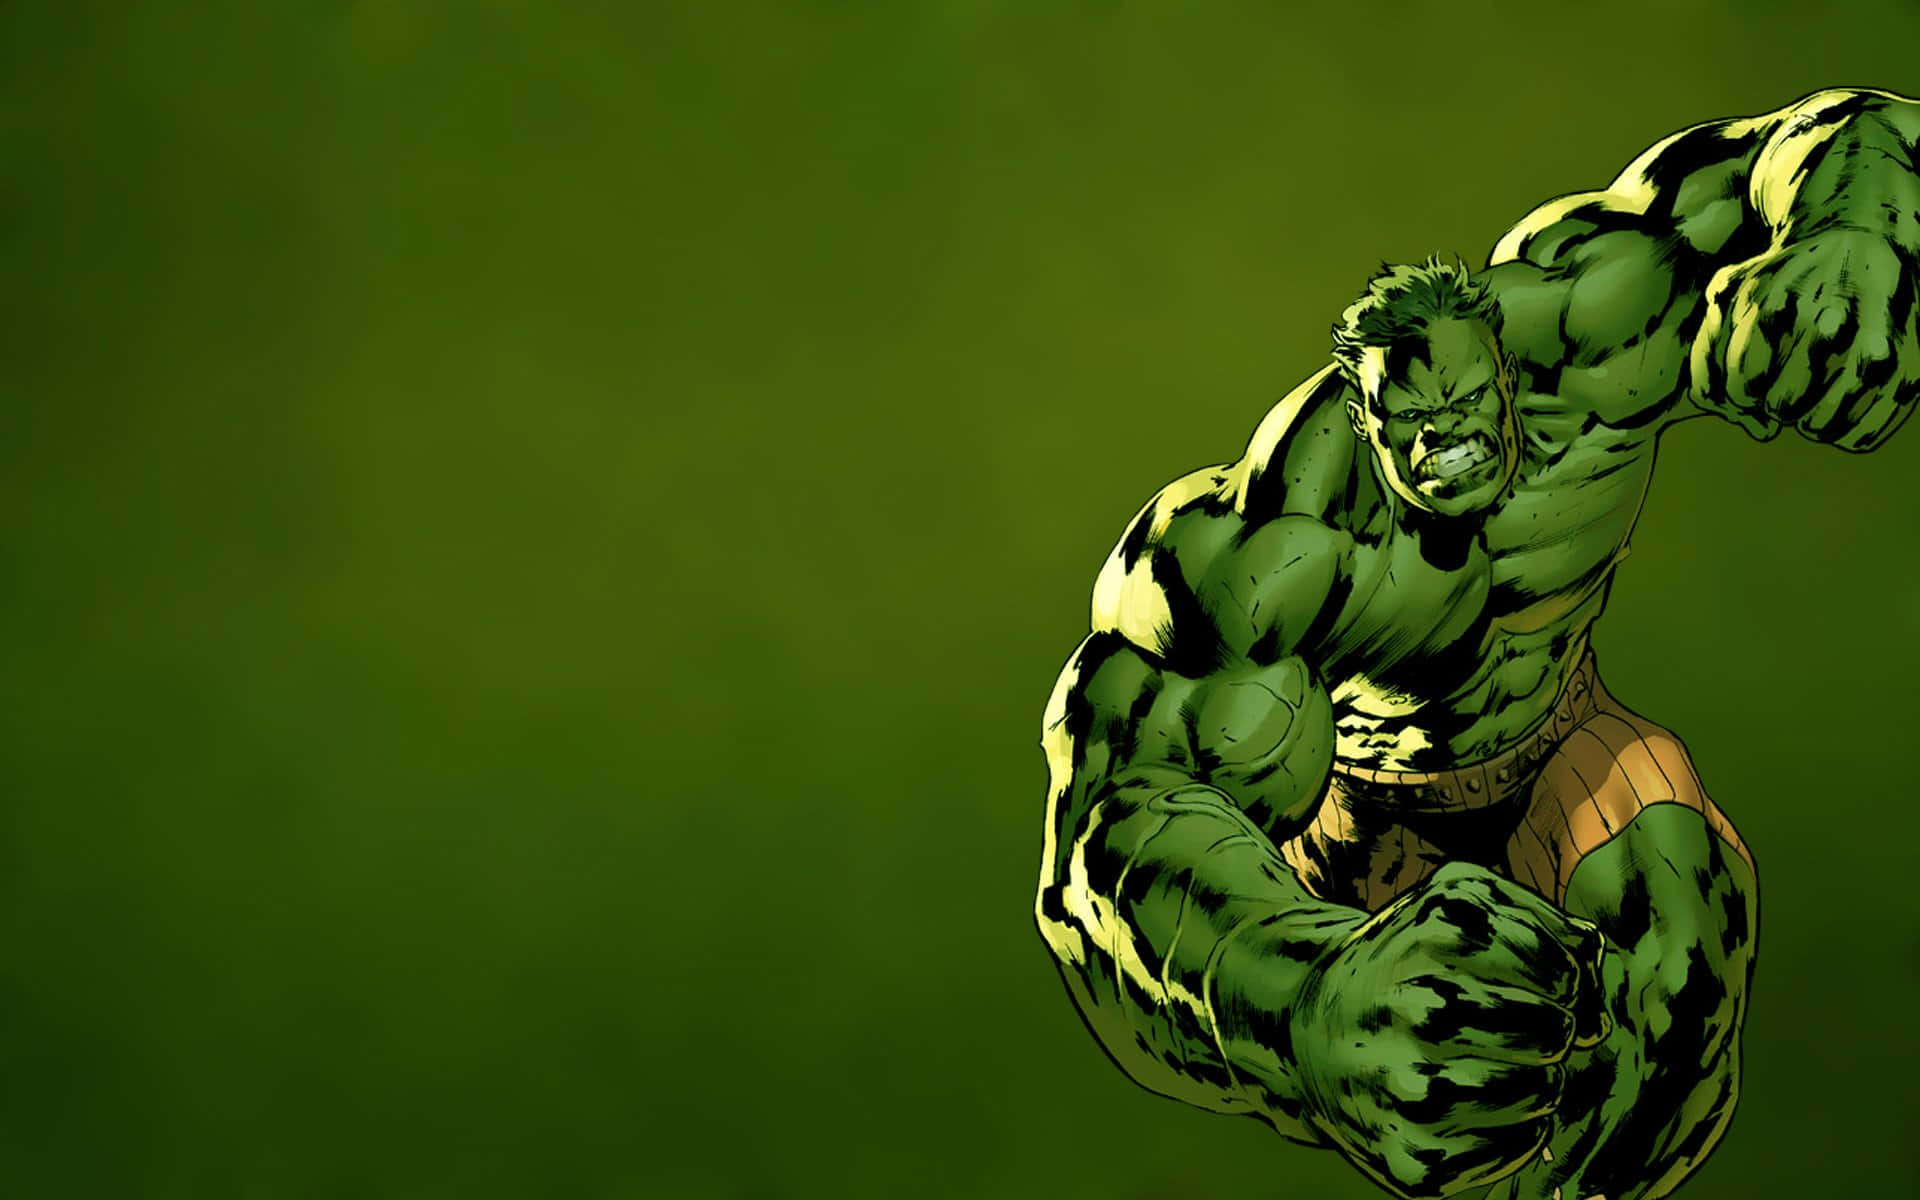 Den utrolige Hulk, klar til at løsne sin vrede